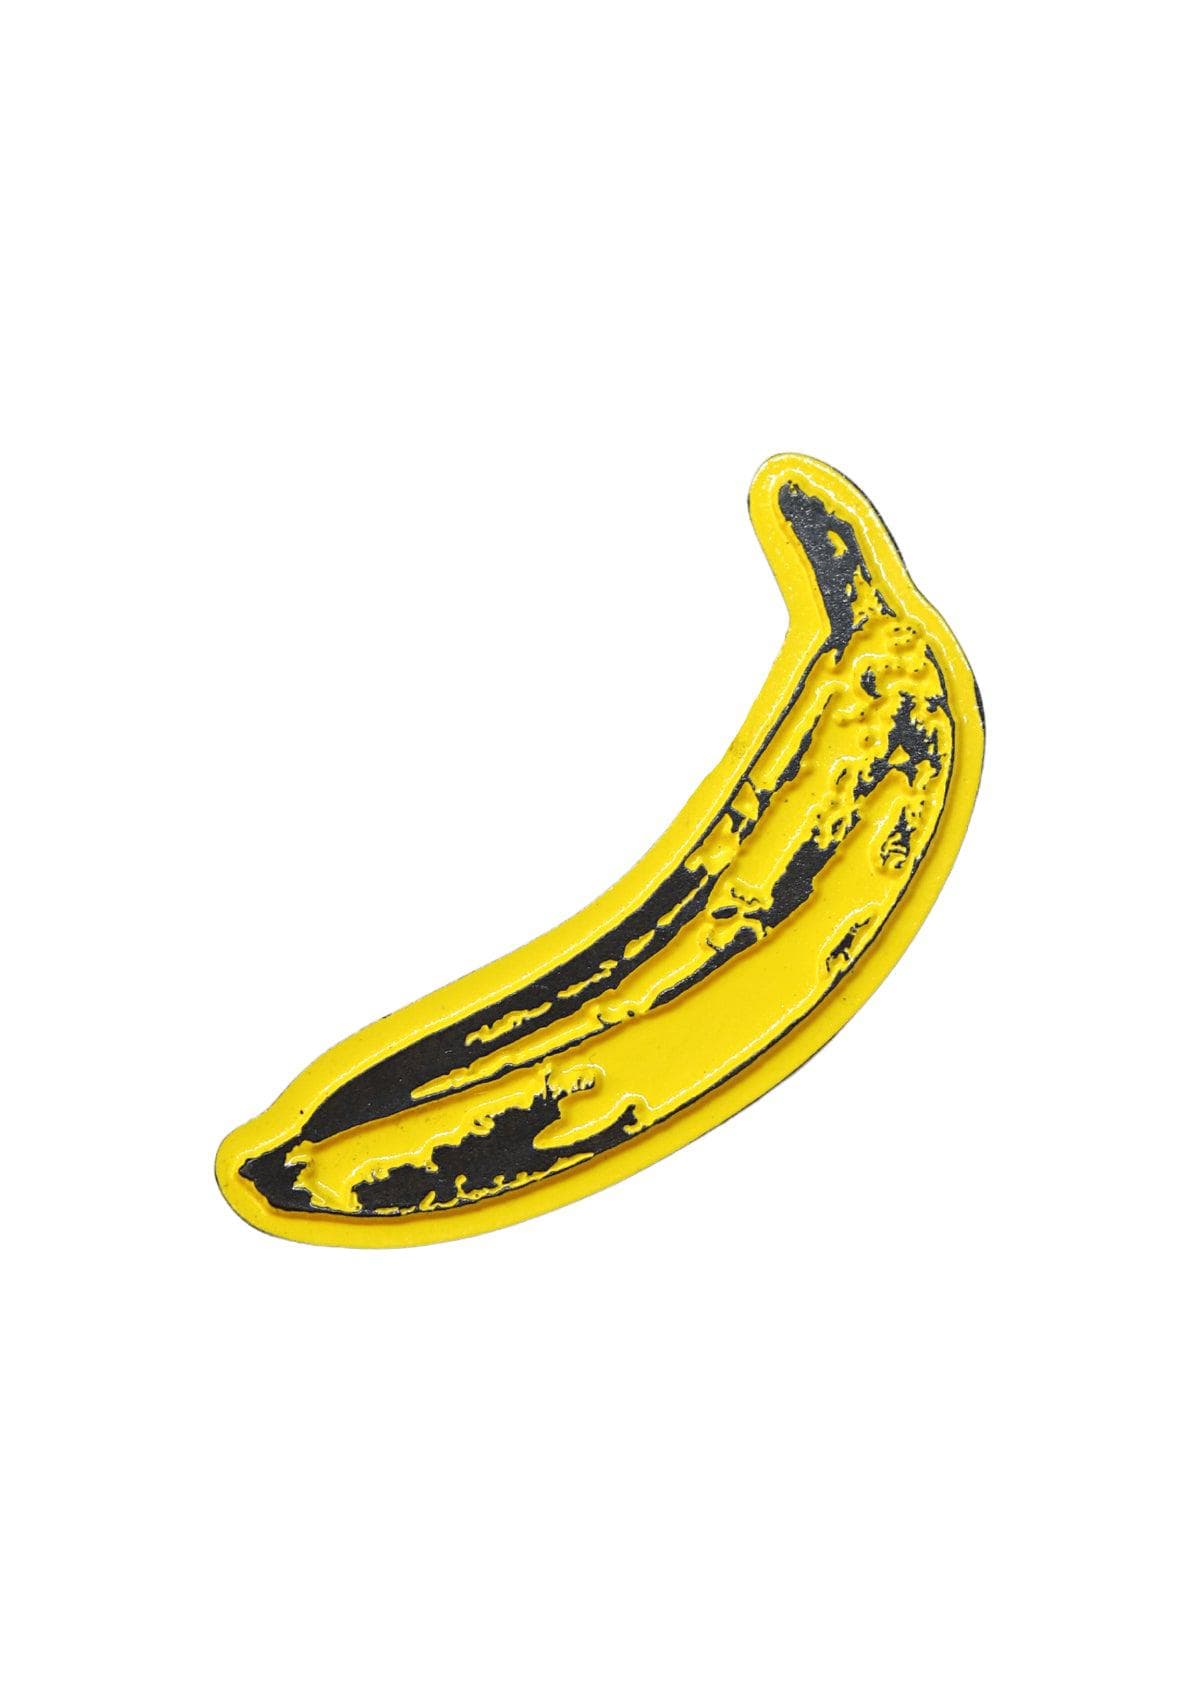 The Darks Banana Warhol - Pin